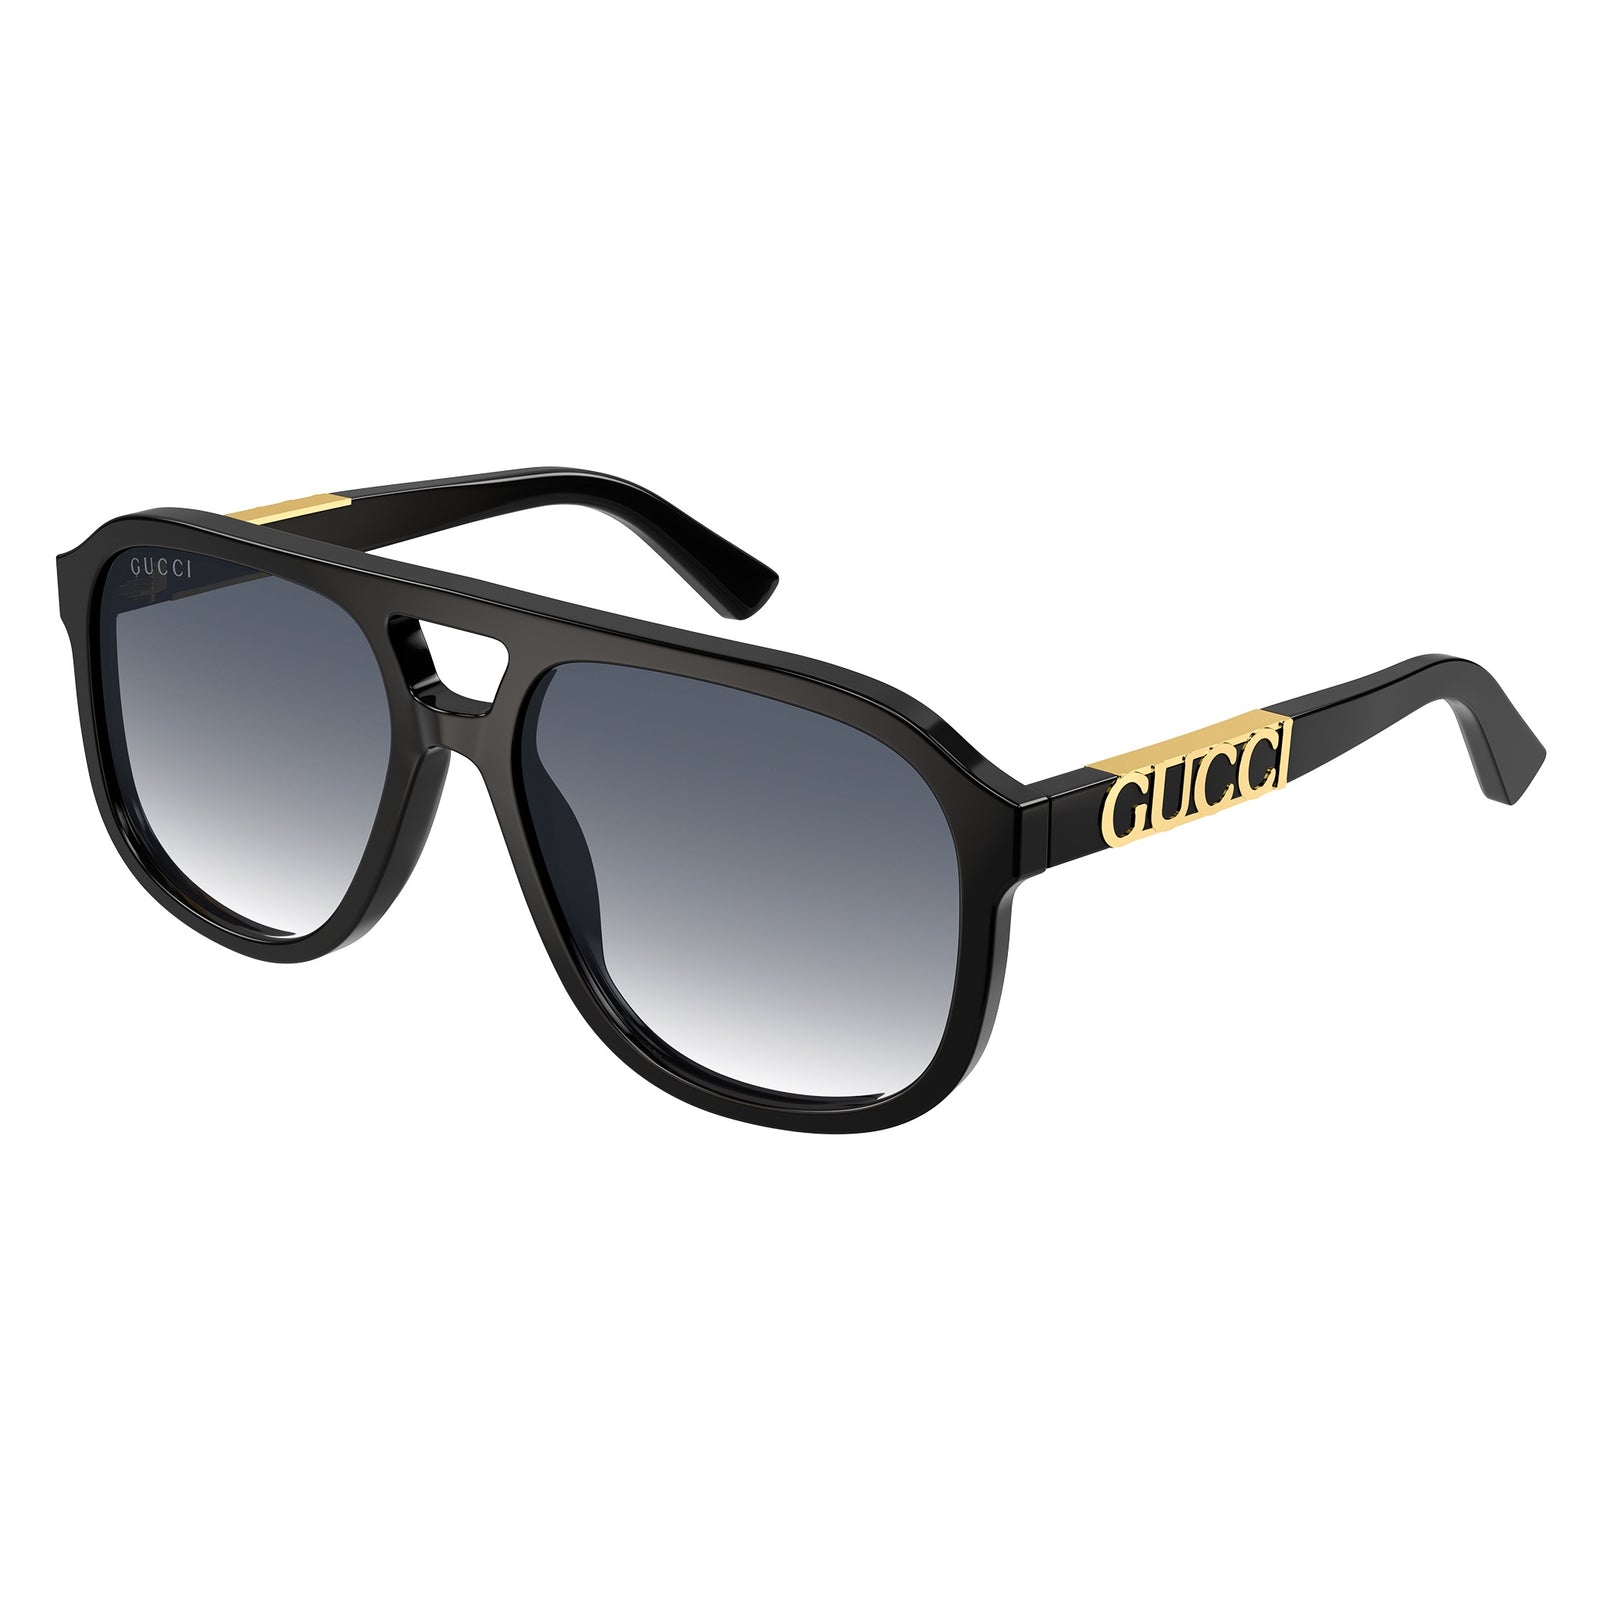 Gucci 002 Black and Sunglasses SUNGLASS